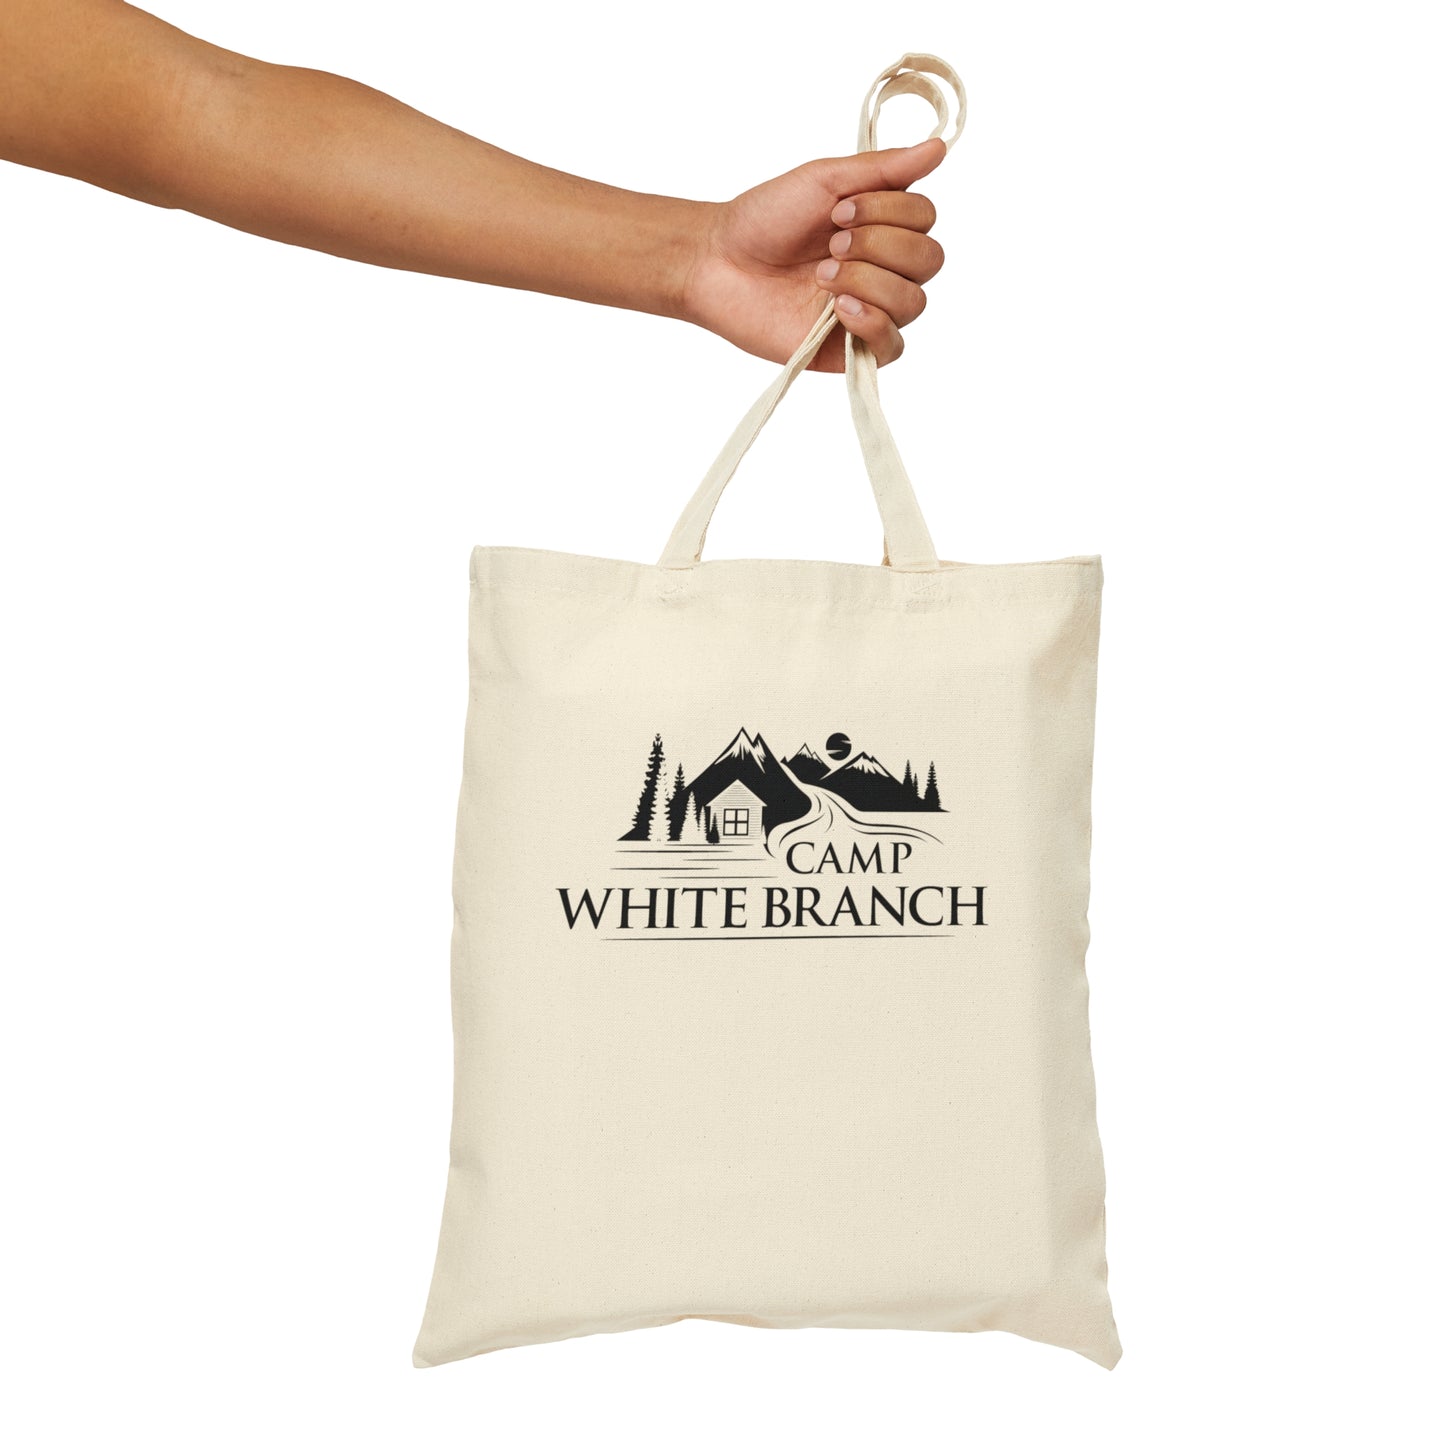 Camp White Branch Cotton Canvas Tote Bag